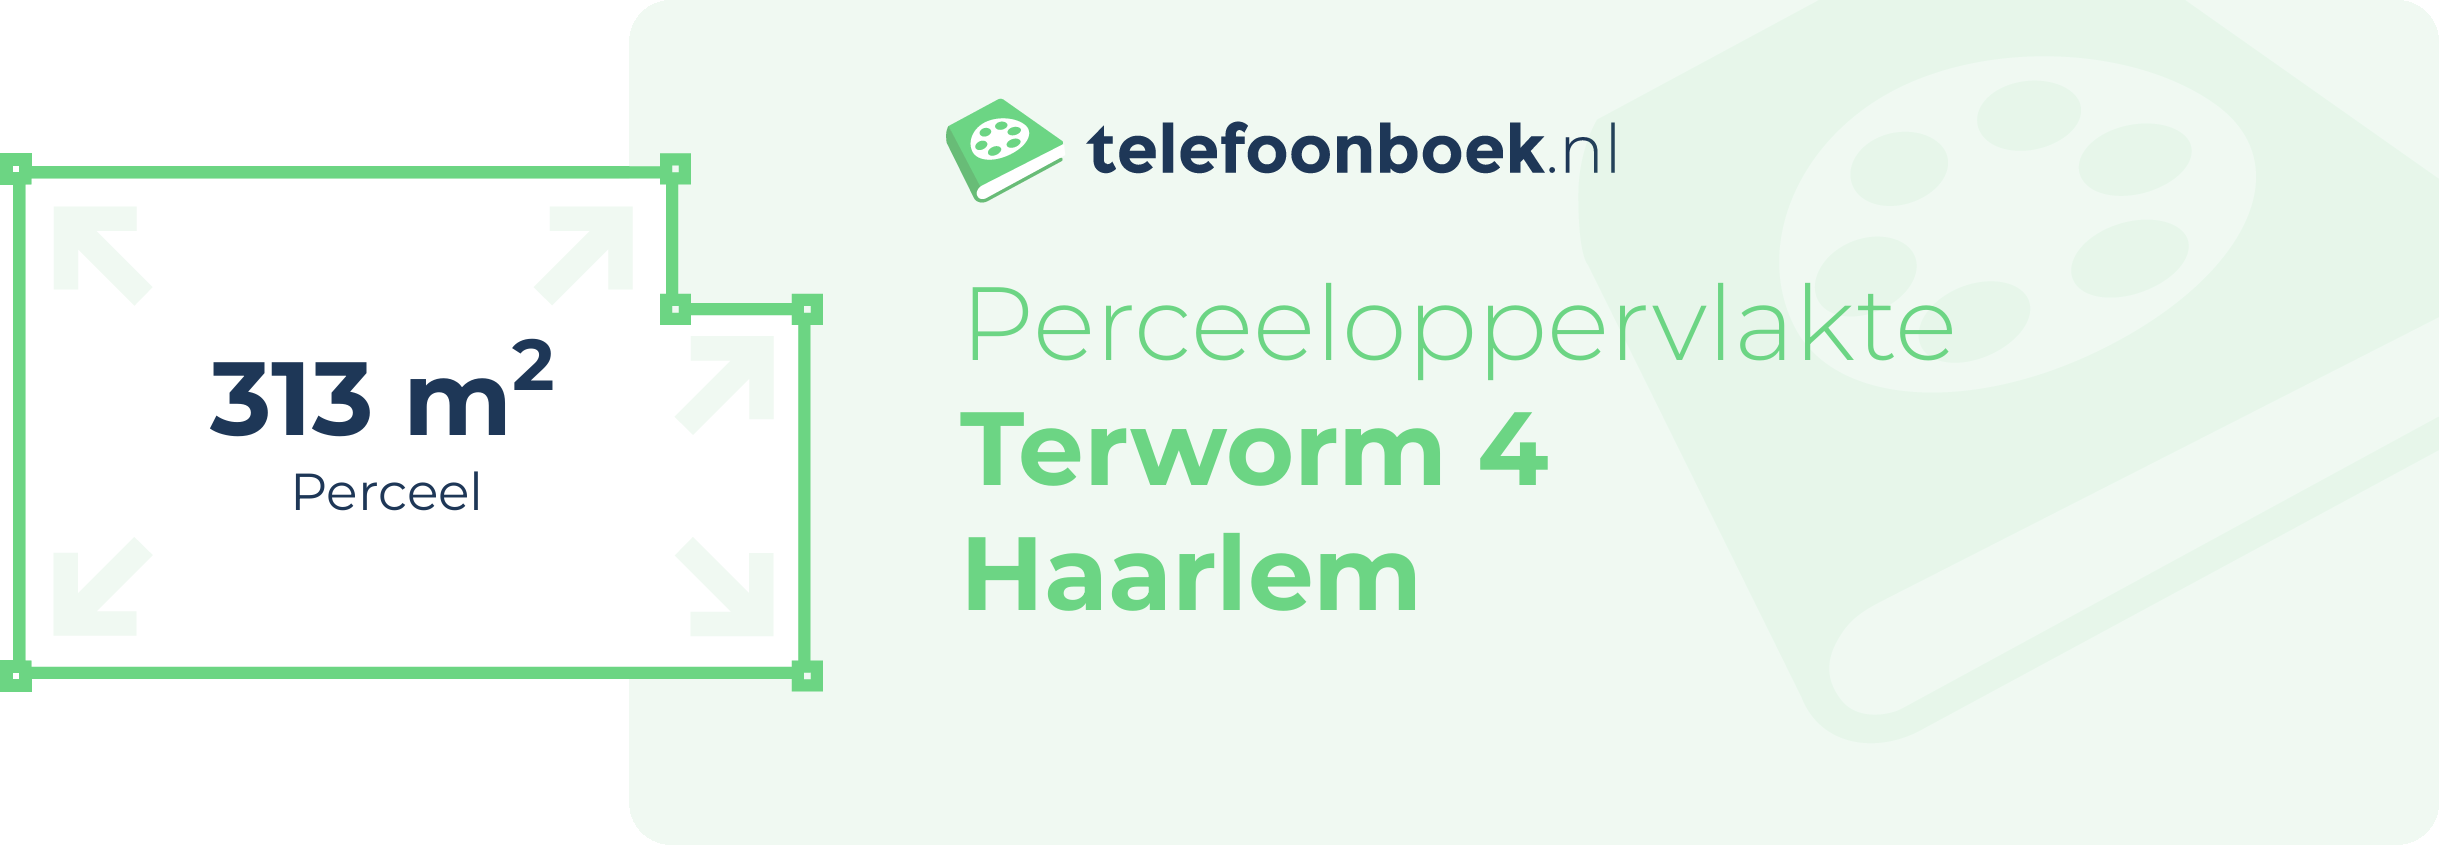 Perceeloppervlakte Terworm 4 Haarlem